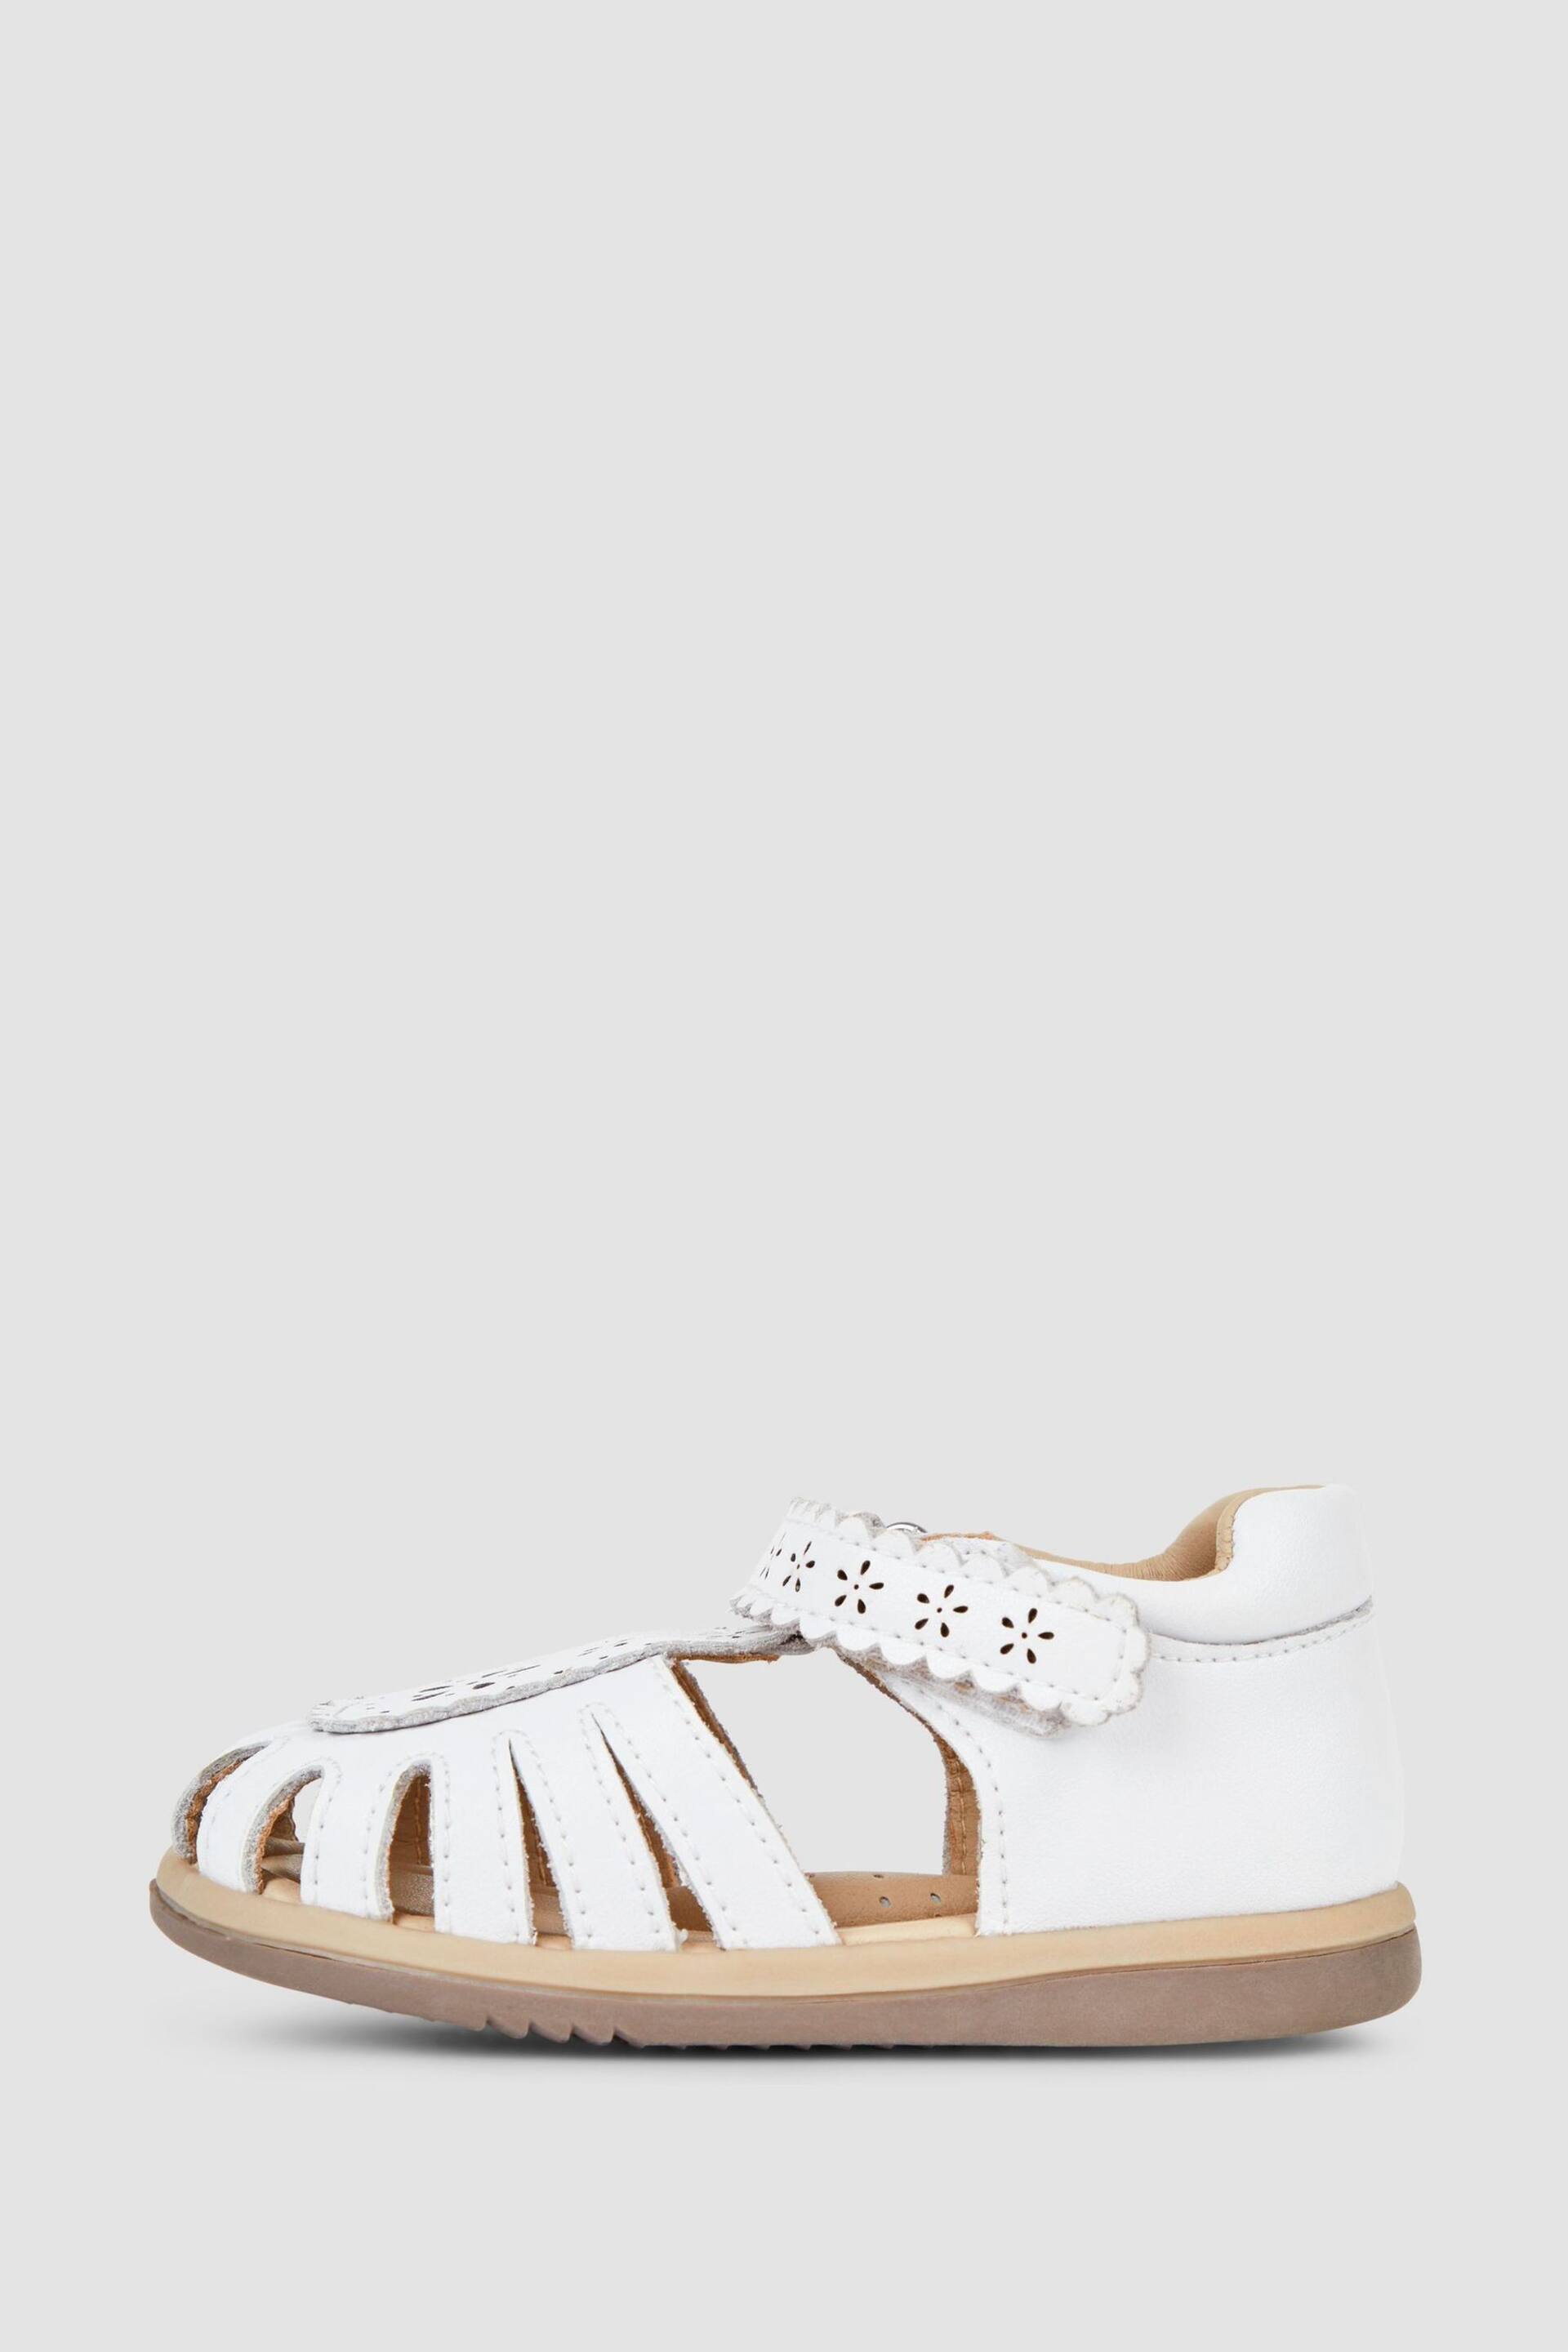 JoJo Maman Bébé White Pretty Leather Closed Toe Sandals - Image 4 of 6